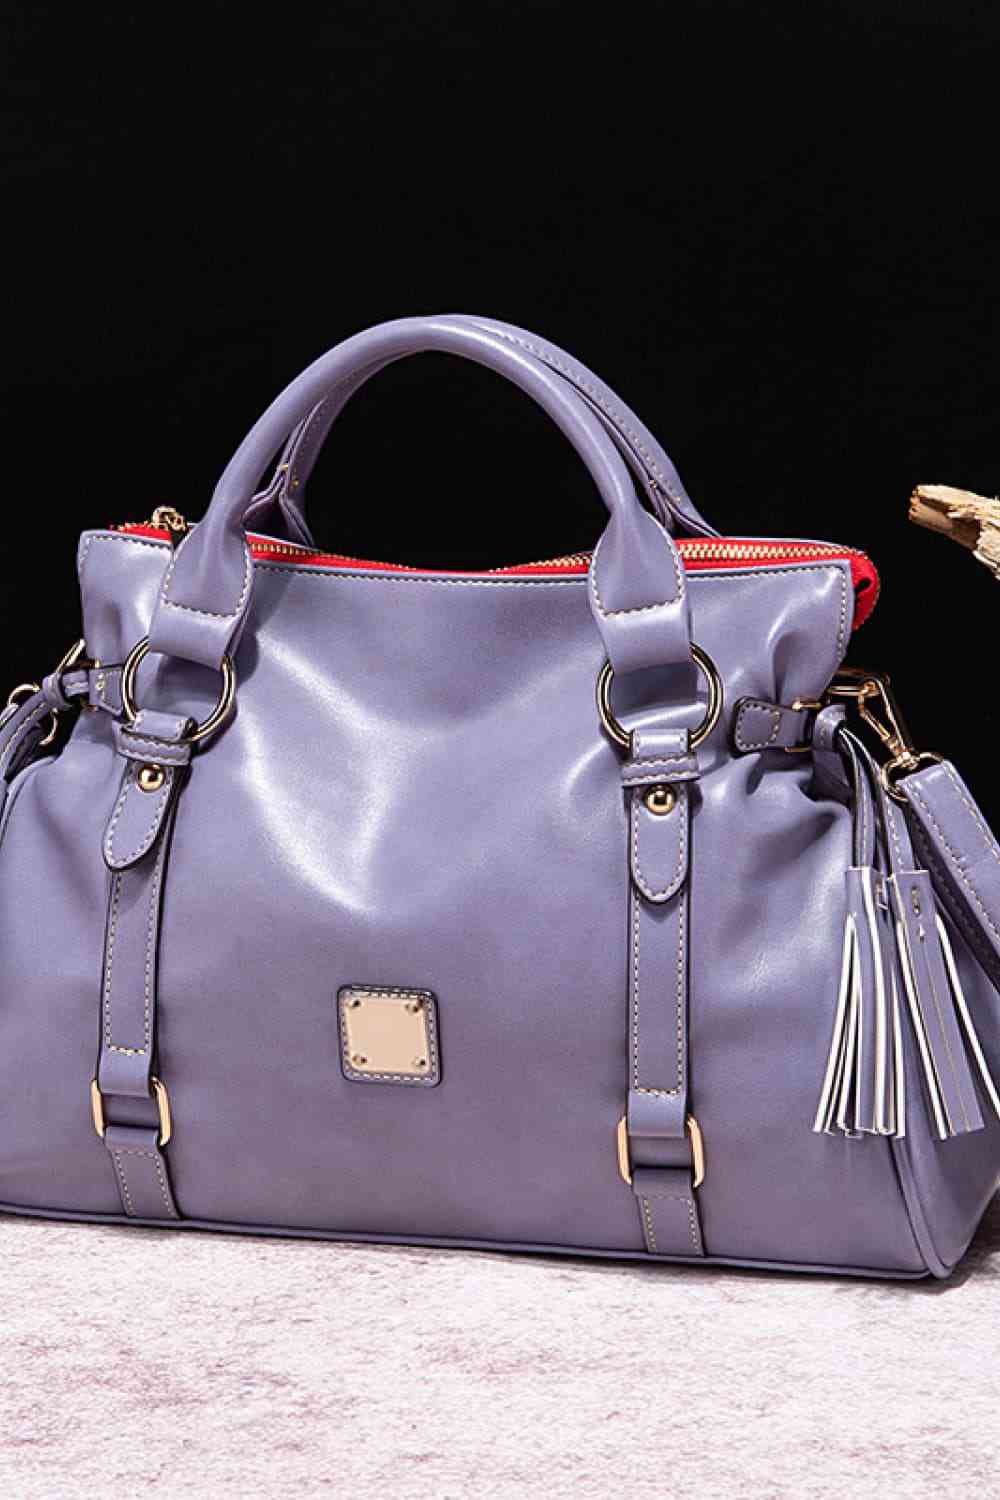 TEEK - PU Leather Handbag with Tassels BAG TEEK Trend Periwinkle  